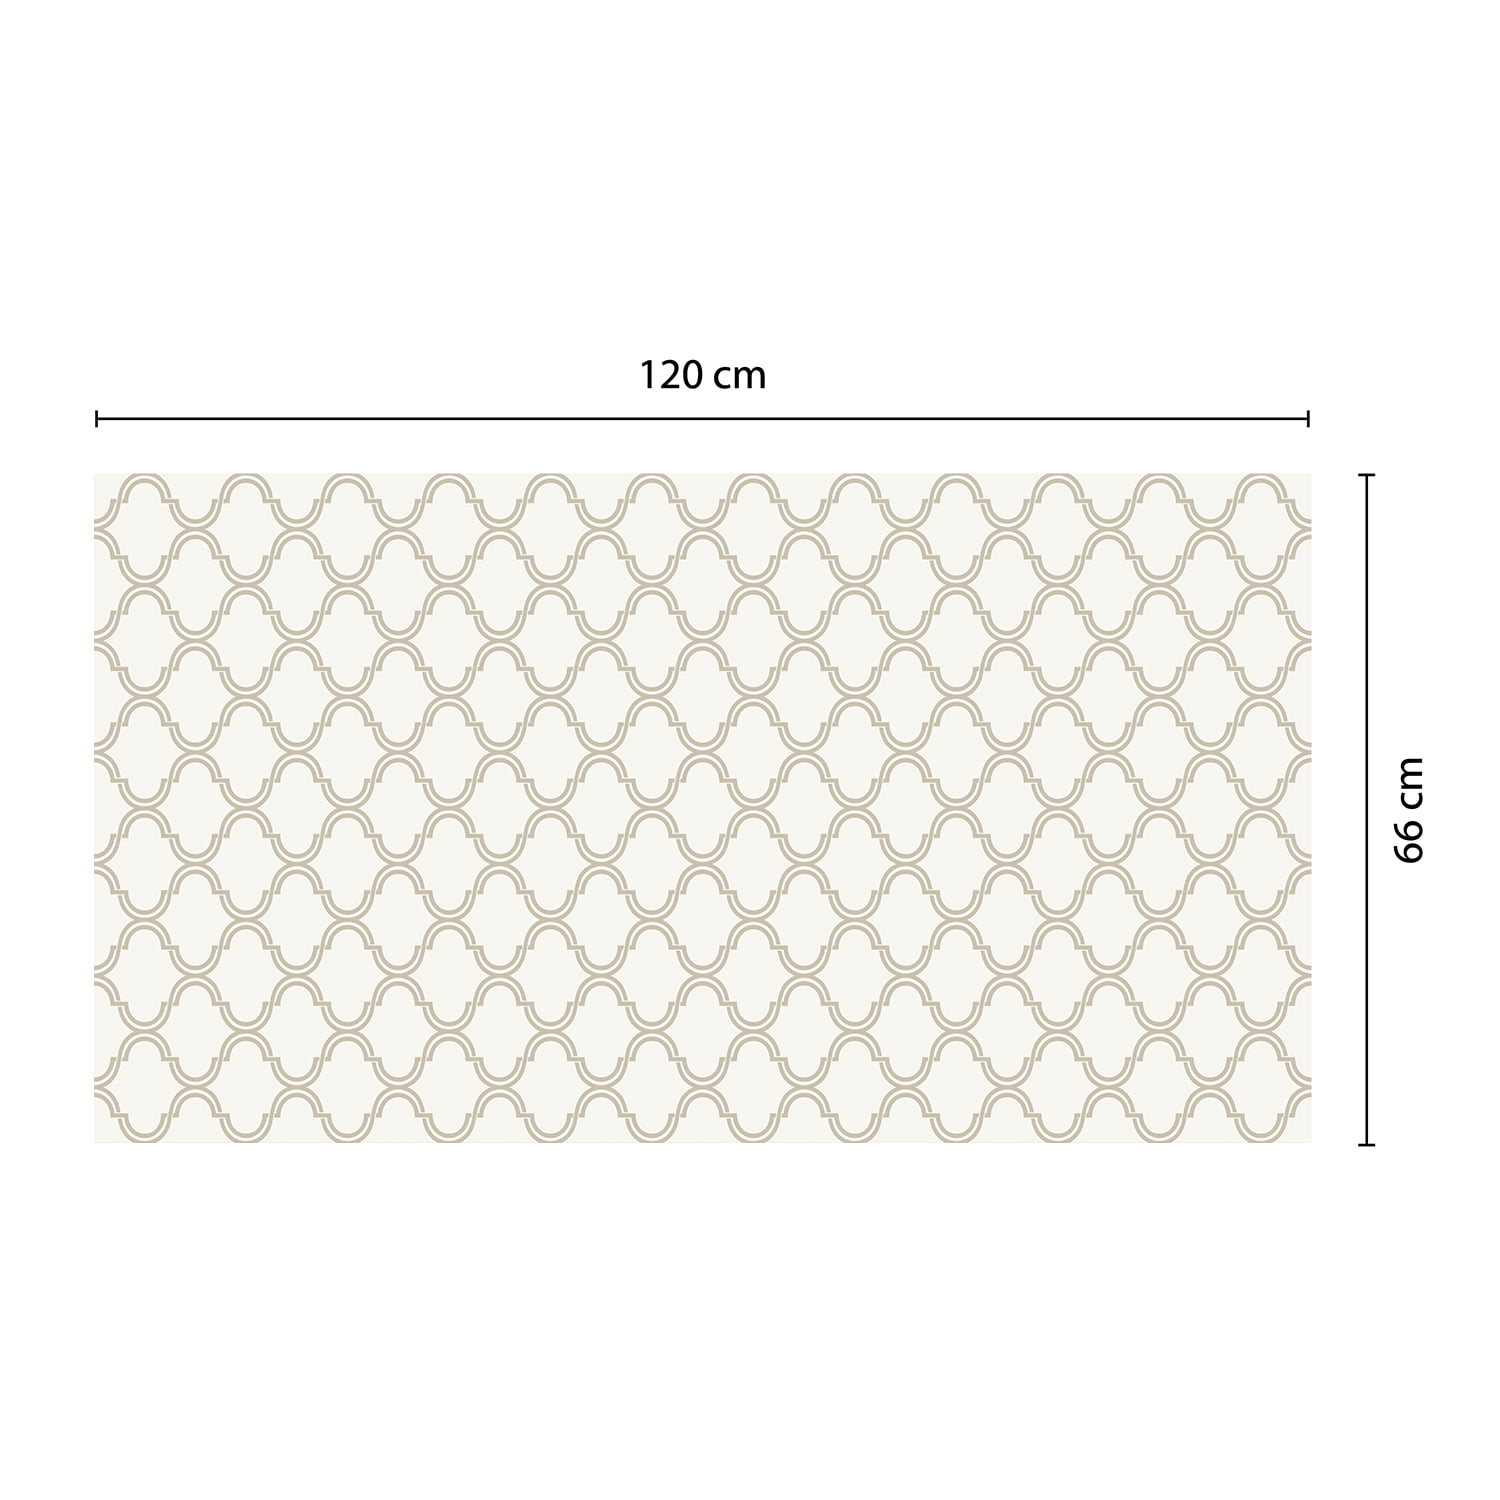 Arabesque Seamless Pattern Mat Non-slip Vinyl Easy-clean Decor 66 cm x 120 cm 